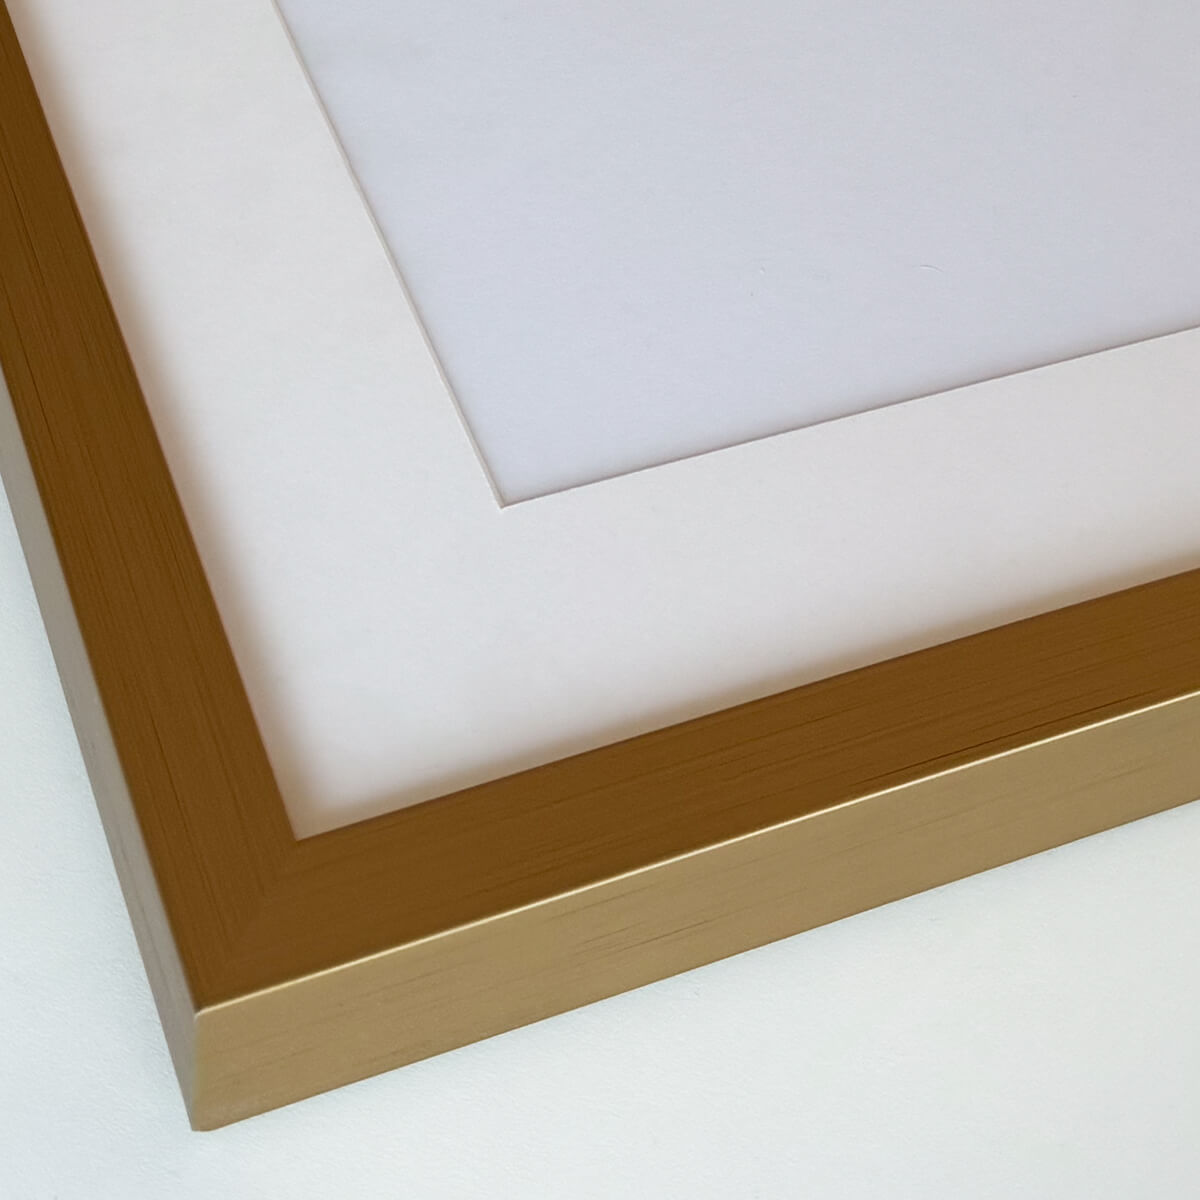 Dark gold wooden frame - Narrow (15 mm) - Custom size